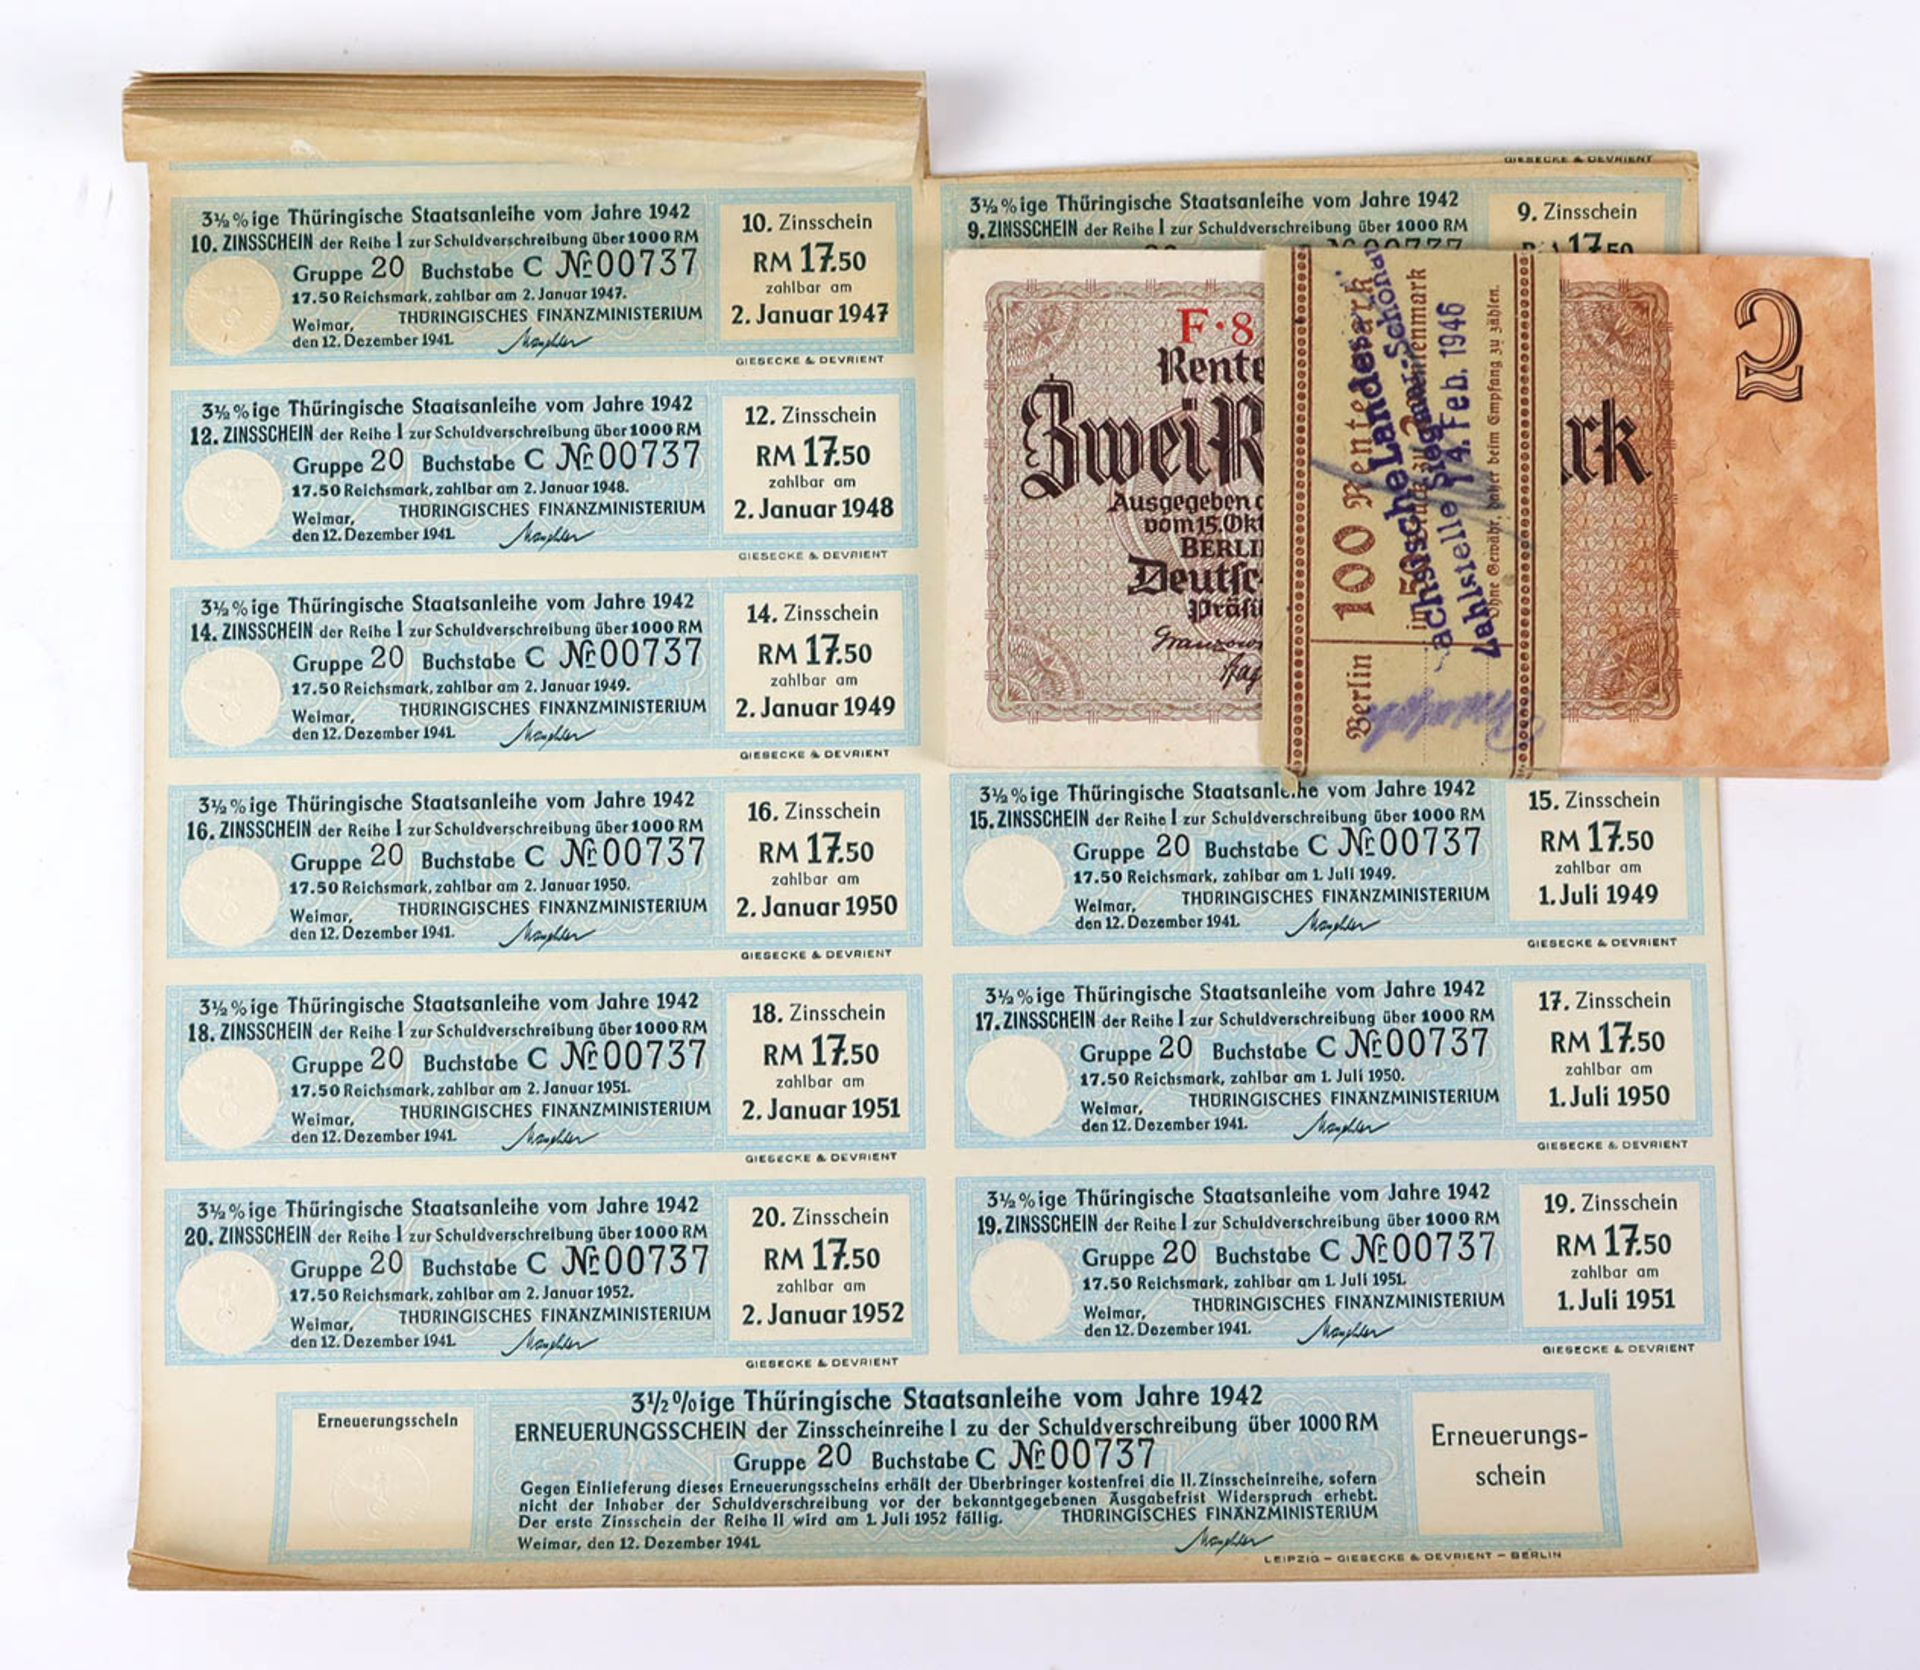 50 x 2 Rentenmark 193750 Rentenbankscheine je Zwei Rentenmark der Deutschen rentenbank Berlin